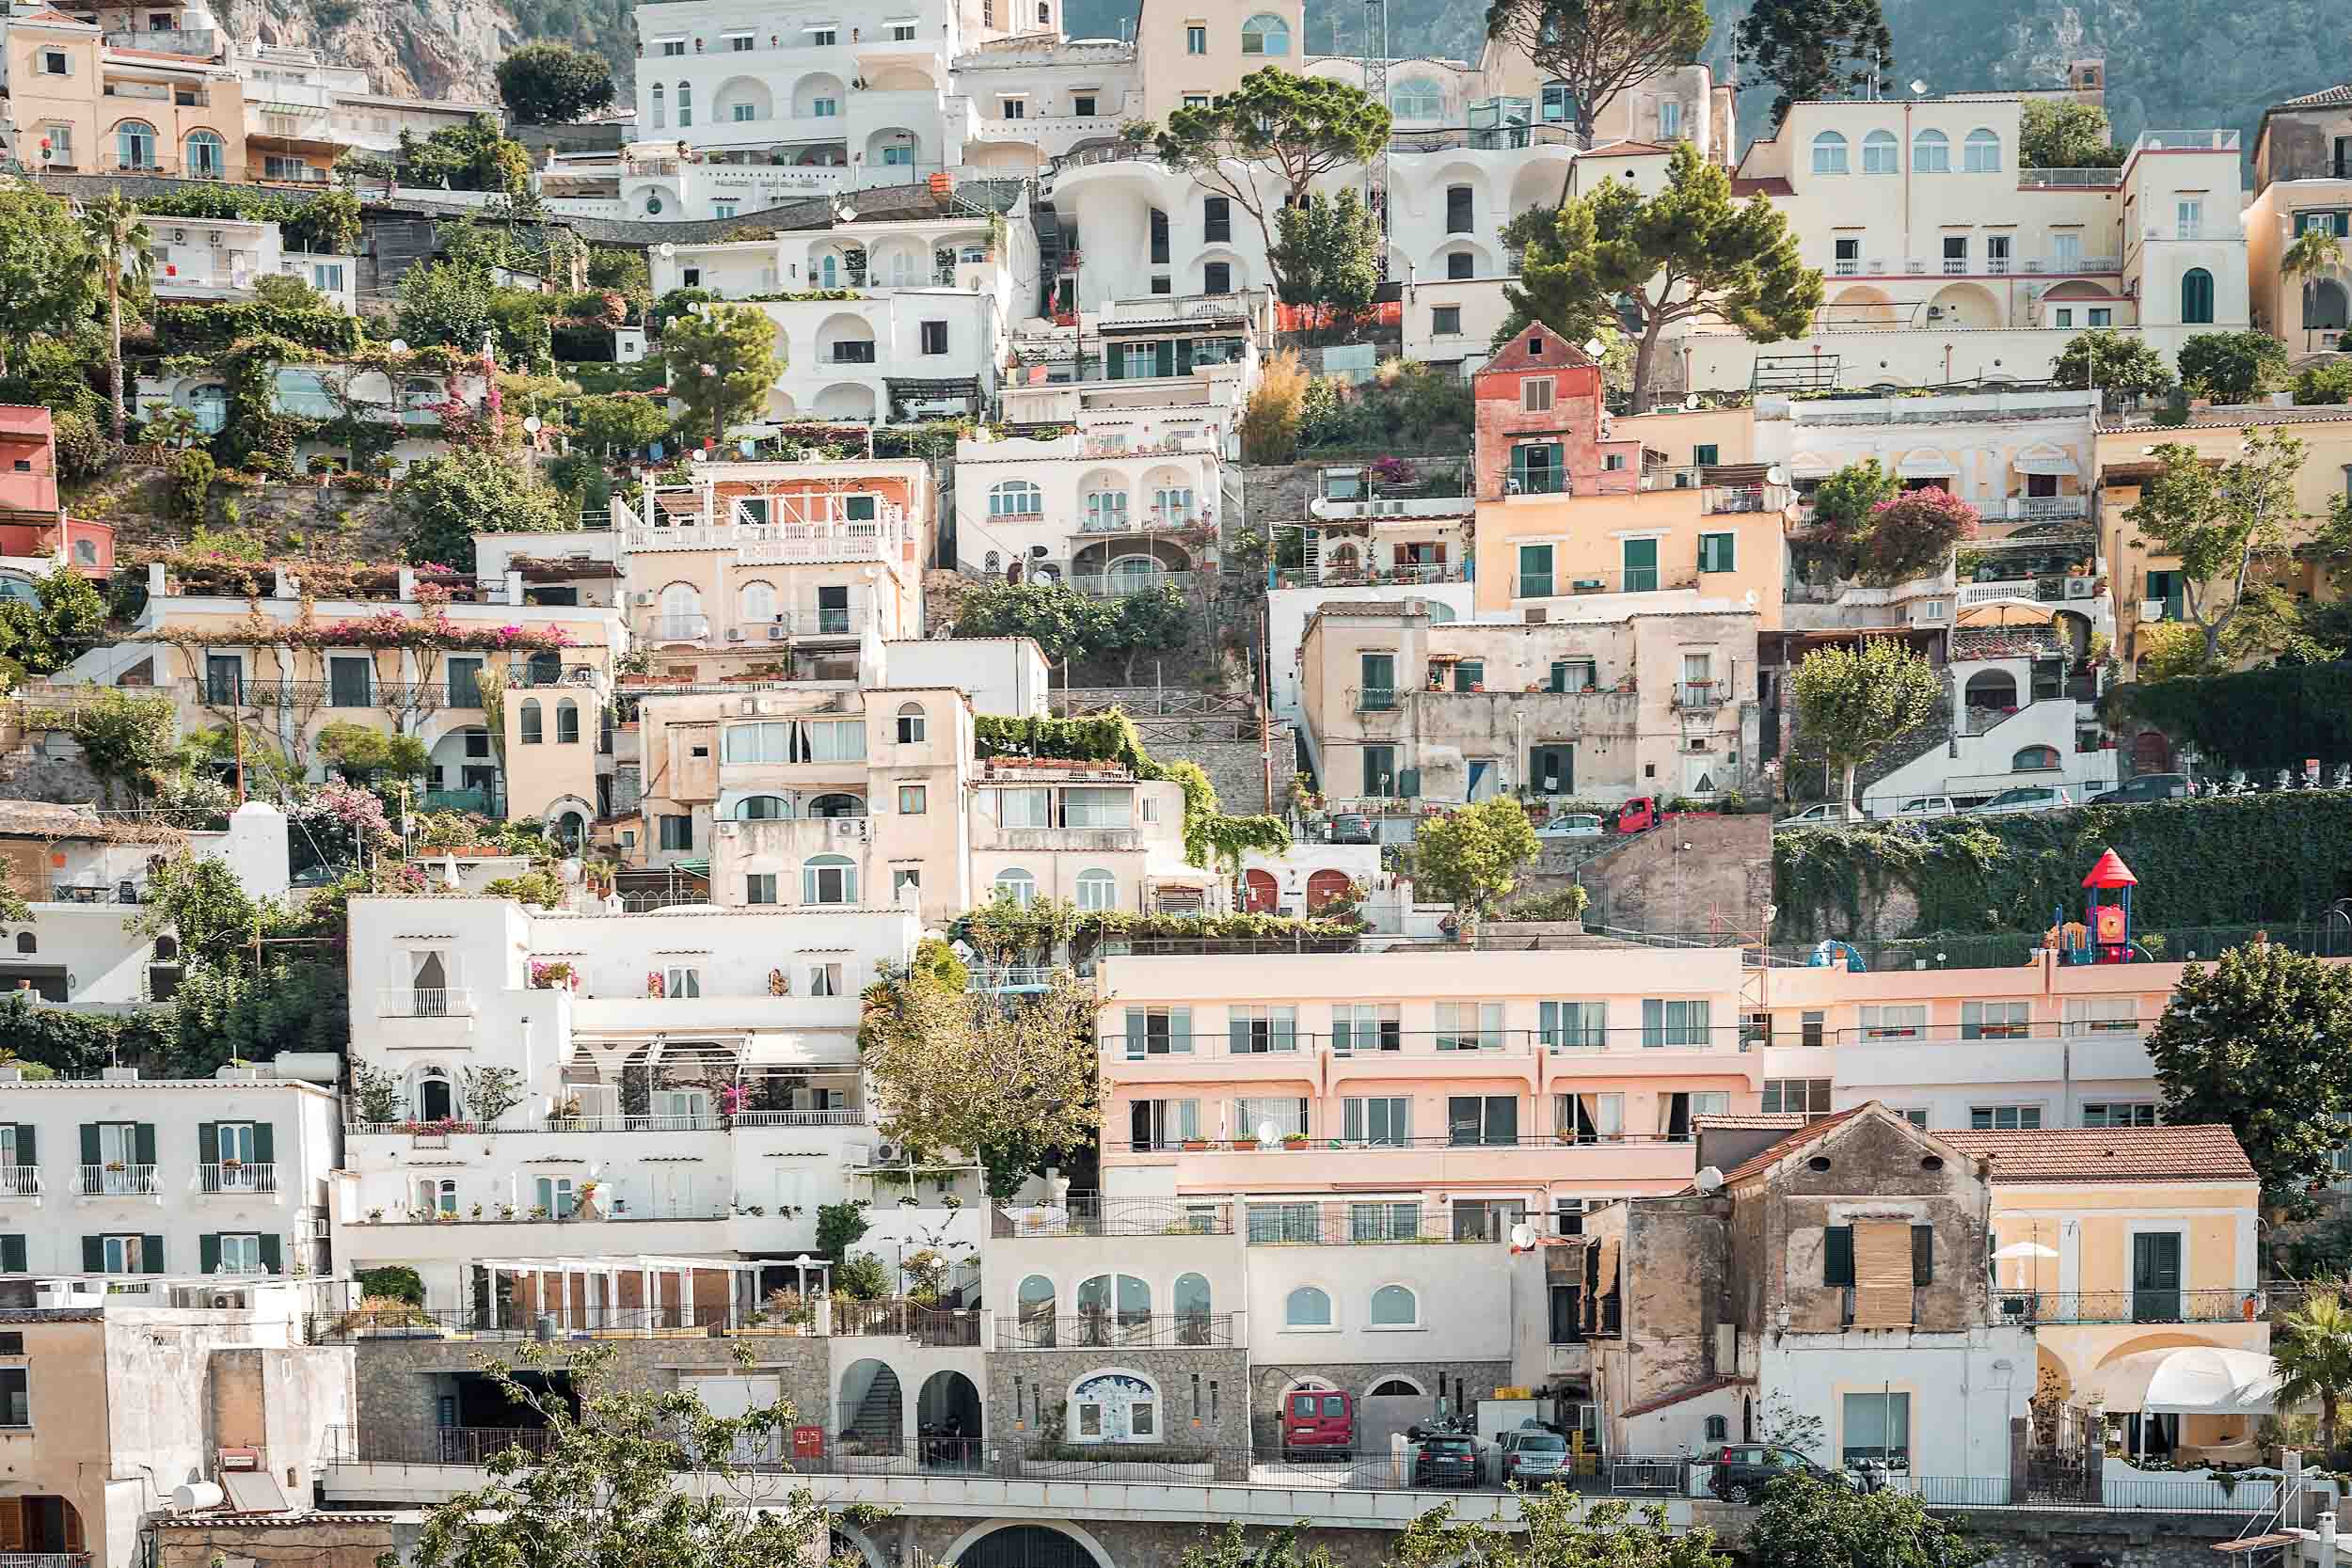 Where to stay on the Amalfi Coast: Positano